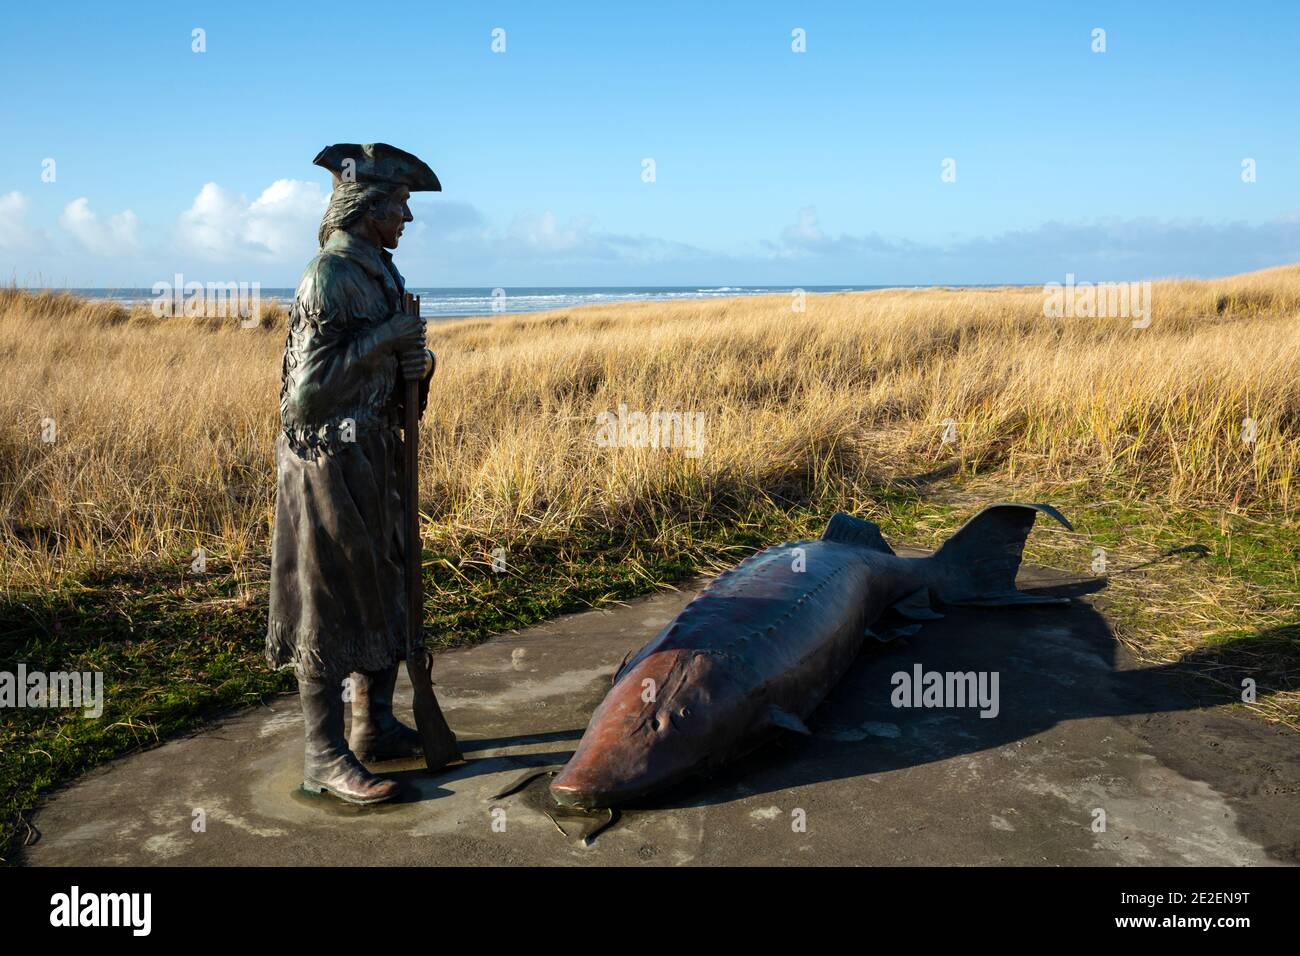 WA19137-00...WASHINGTON - Statue of William Clark viewing a 10 foot sturgeon on the beach while exploring the Long Beach Peninsula. Stock Photo